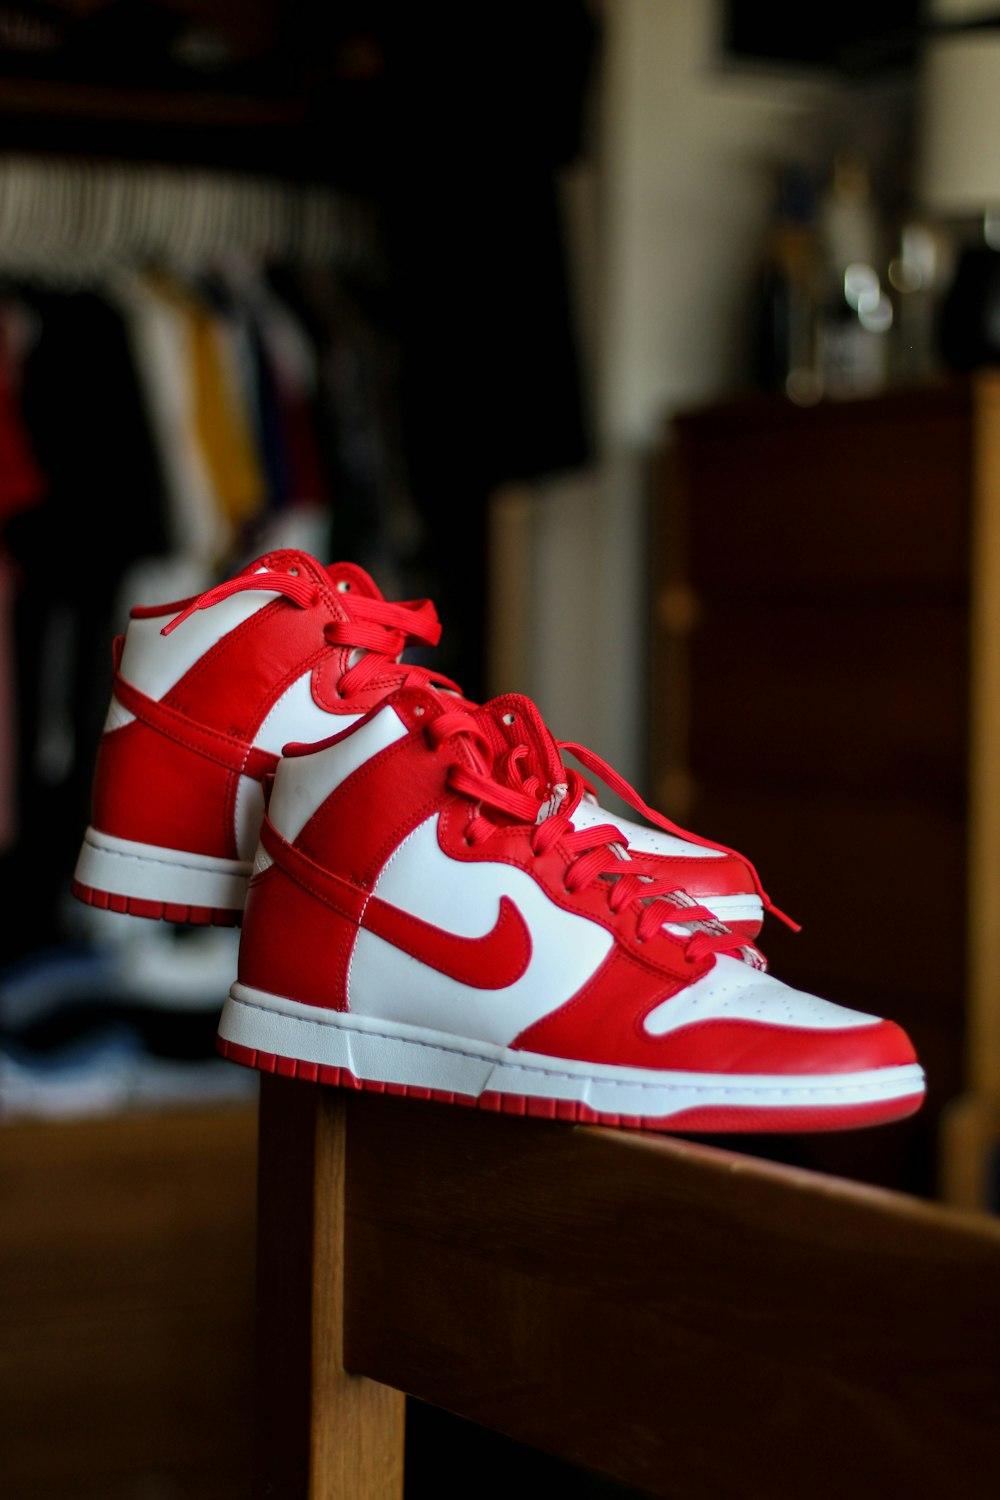 Un paio di scarpe da ginnastica rosse e bianche su una panca di legno foto  – Stile Immagine gratuita su Unsplash